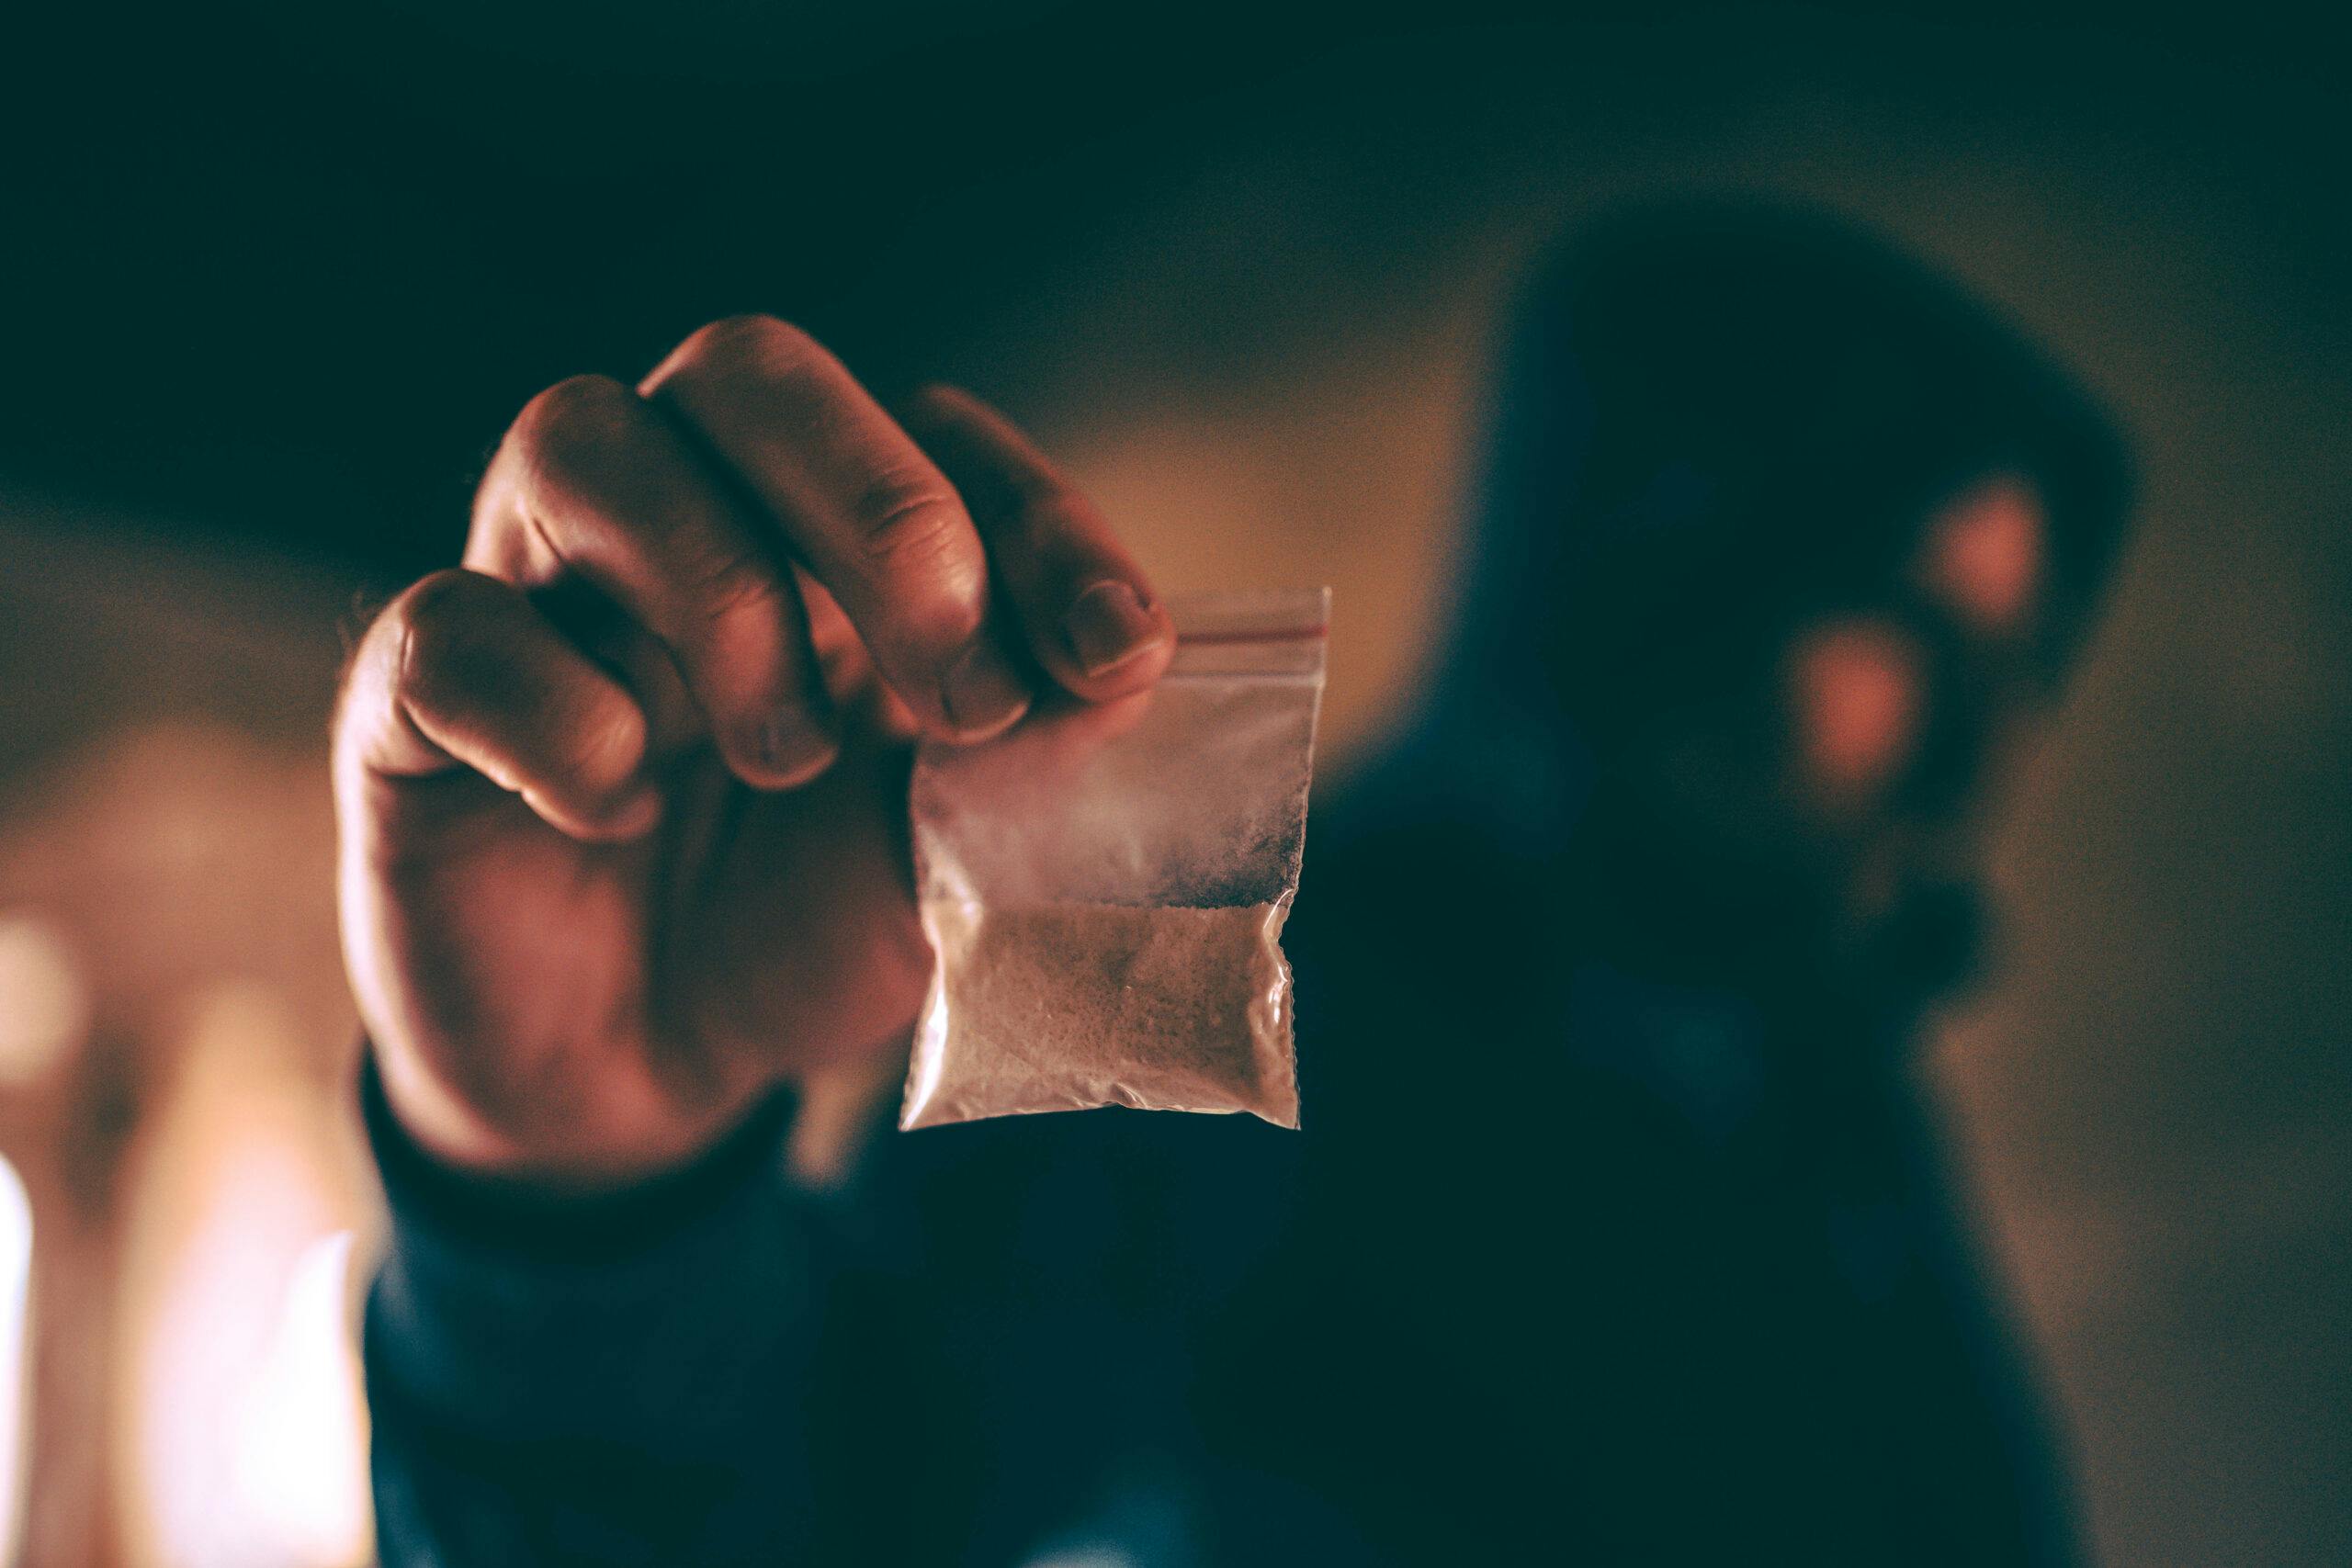 man holding bag of heroin close up